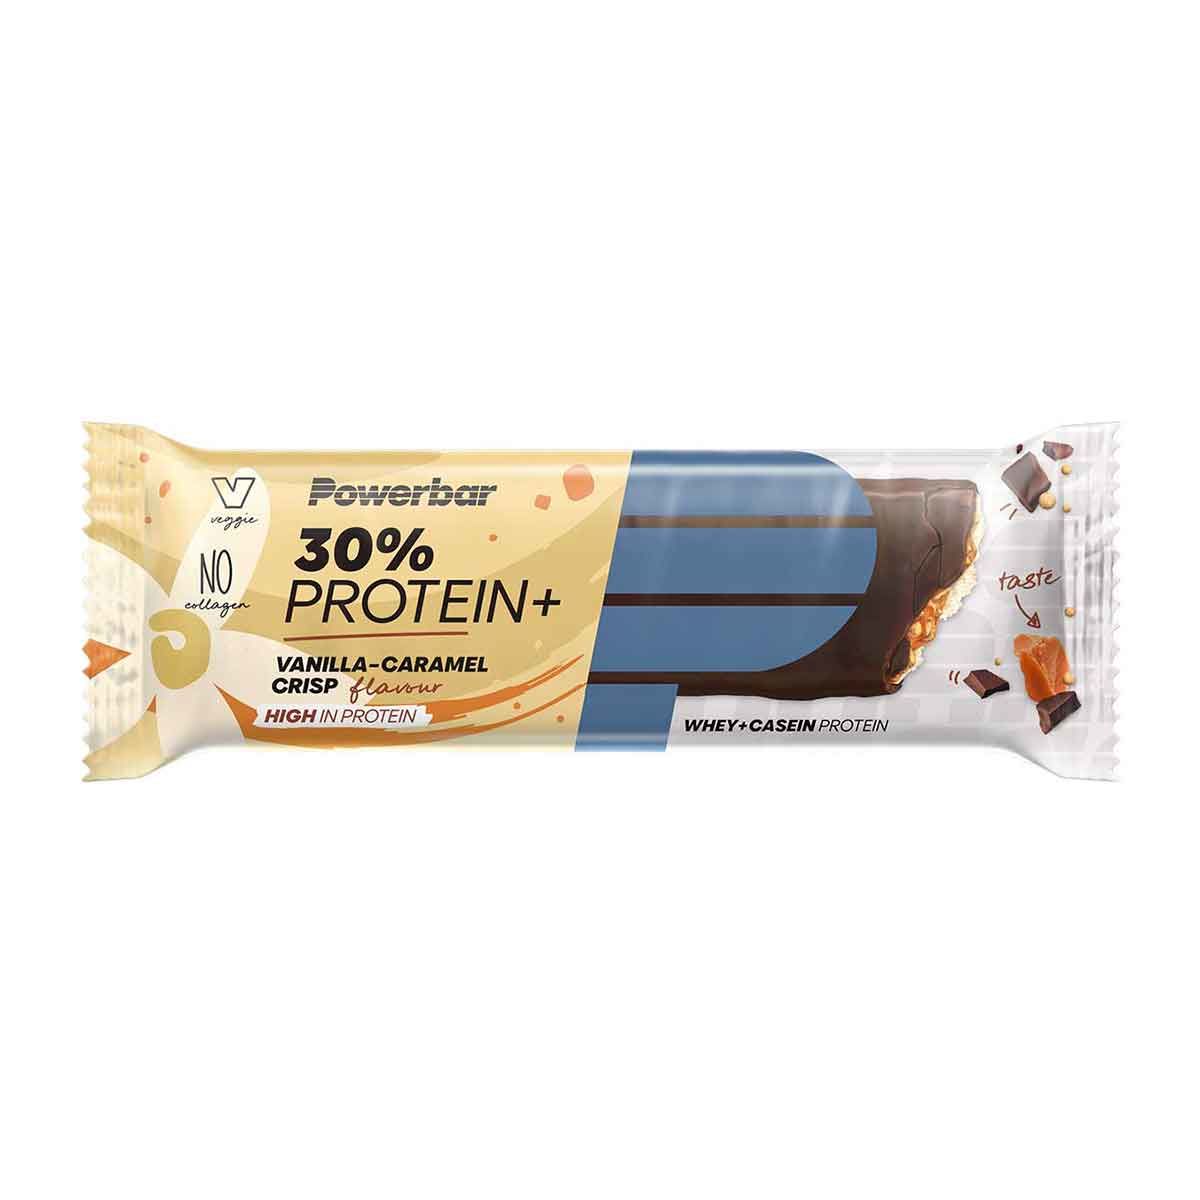 Powerbar 30% Protein Plus bar - Vanilla, caramel